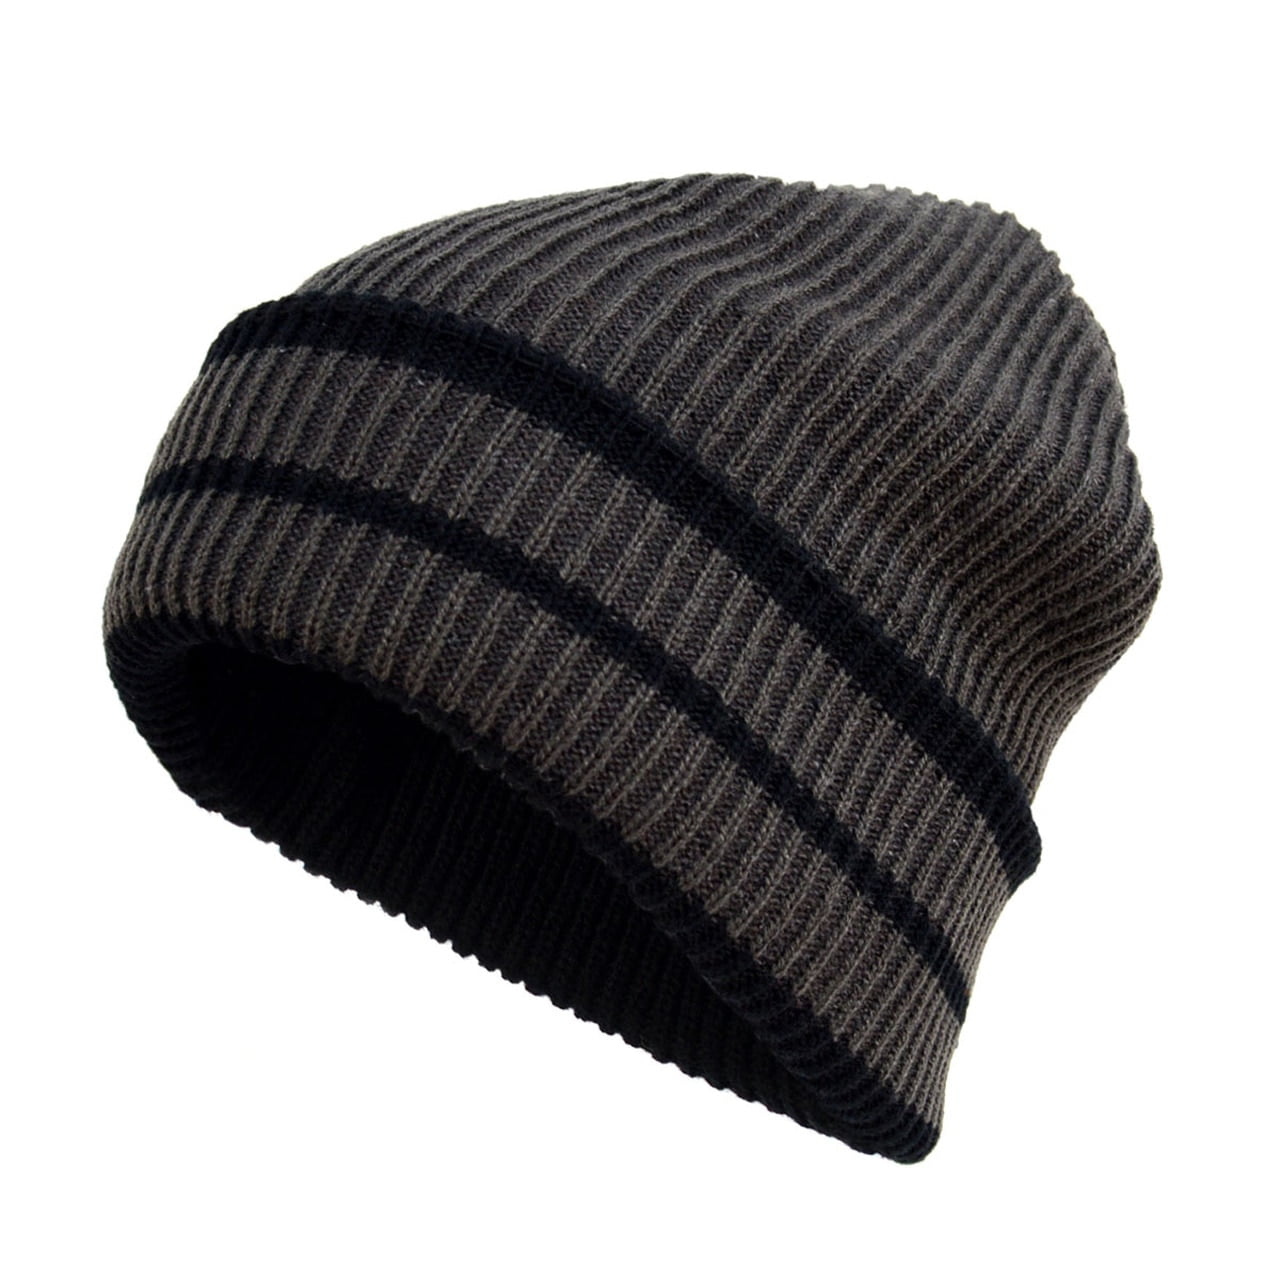 3x Plain Beanie Ski Cap Hat Skull Knit Winter Cuff Pick Your Color Mens & Womens 